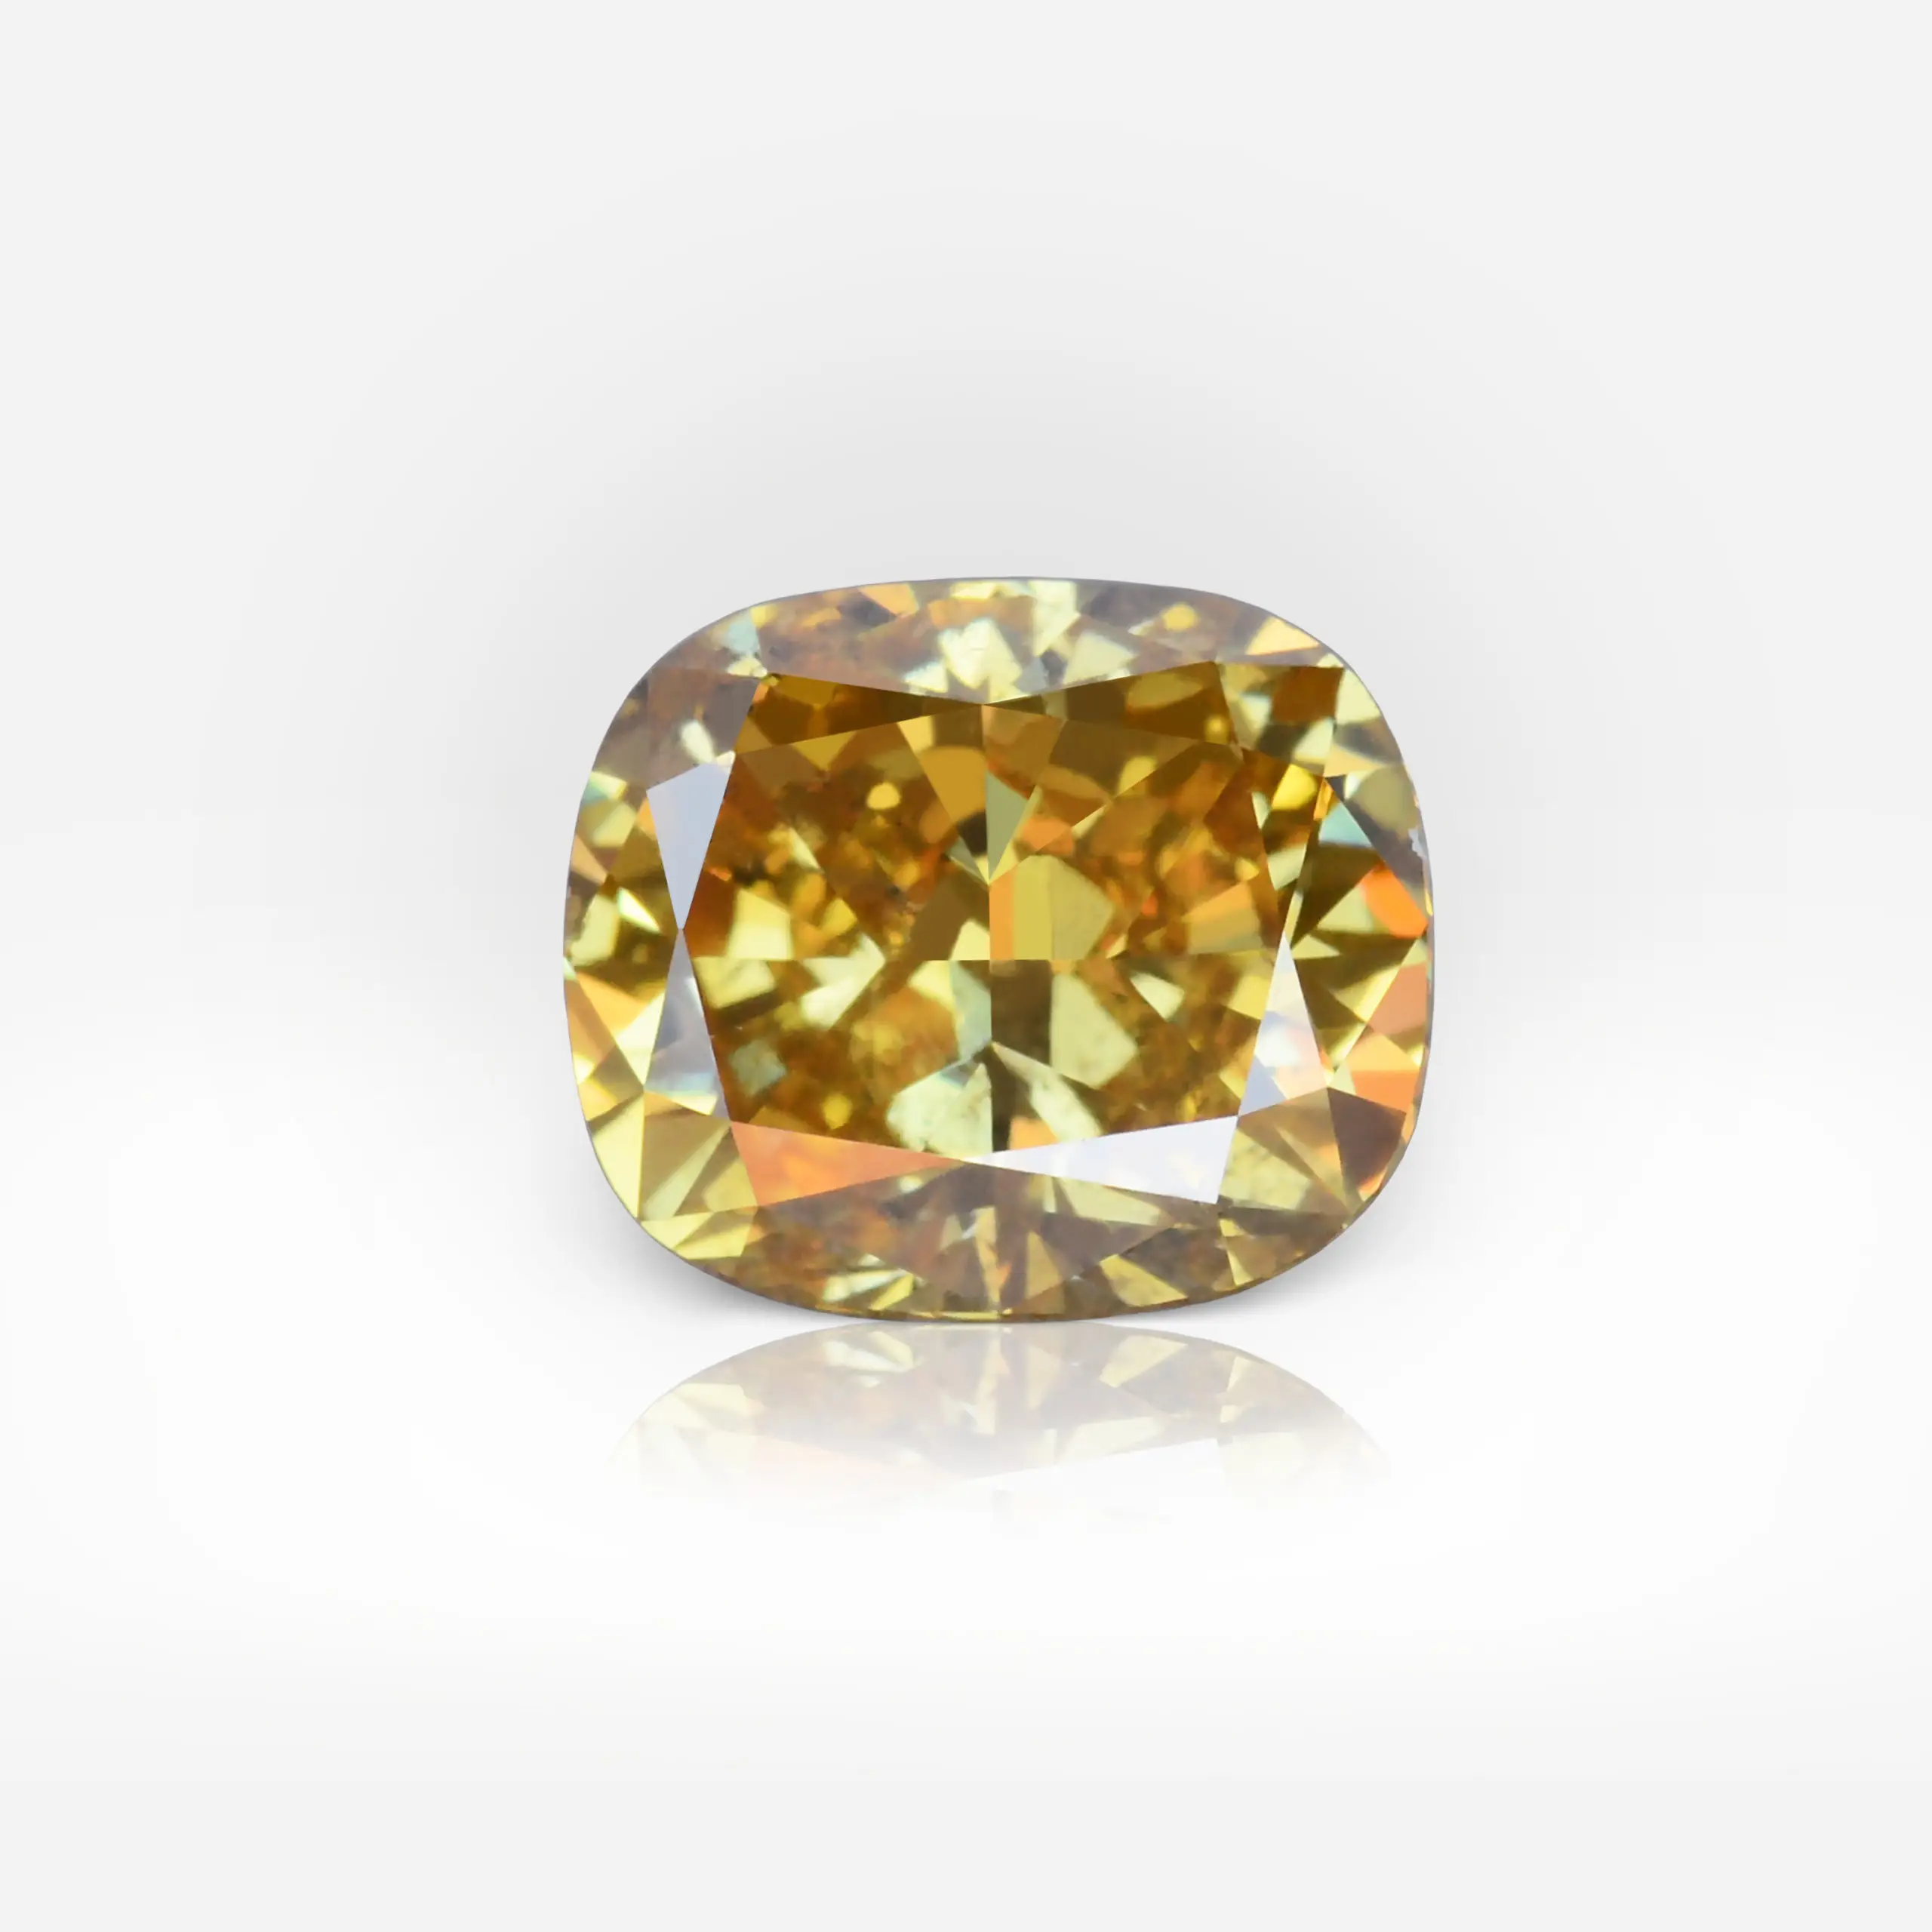 1.12 carat Fancy Deep Yellow Cushion Shape Diamond GIA - picture 1